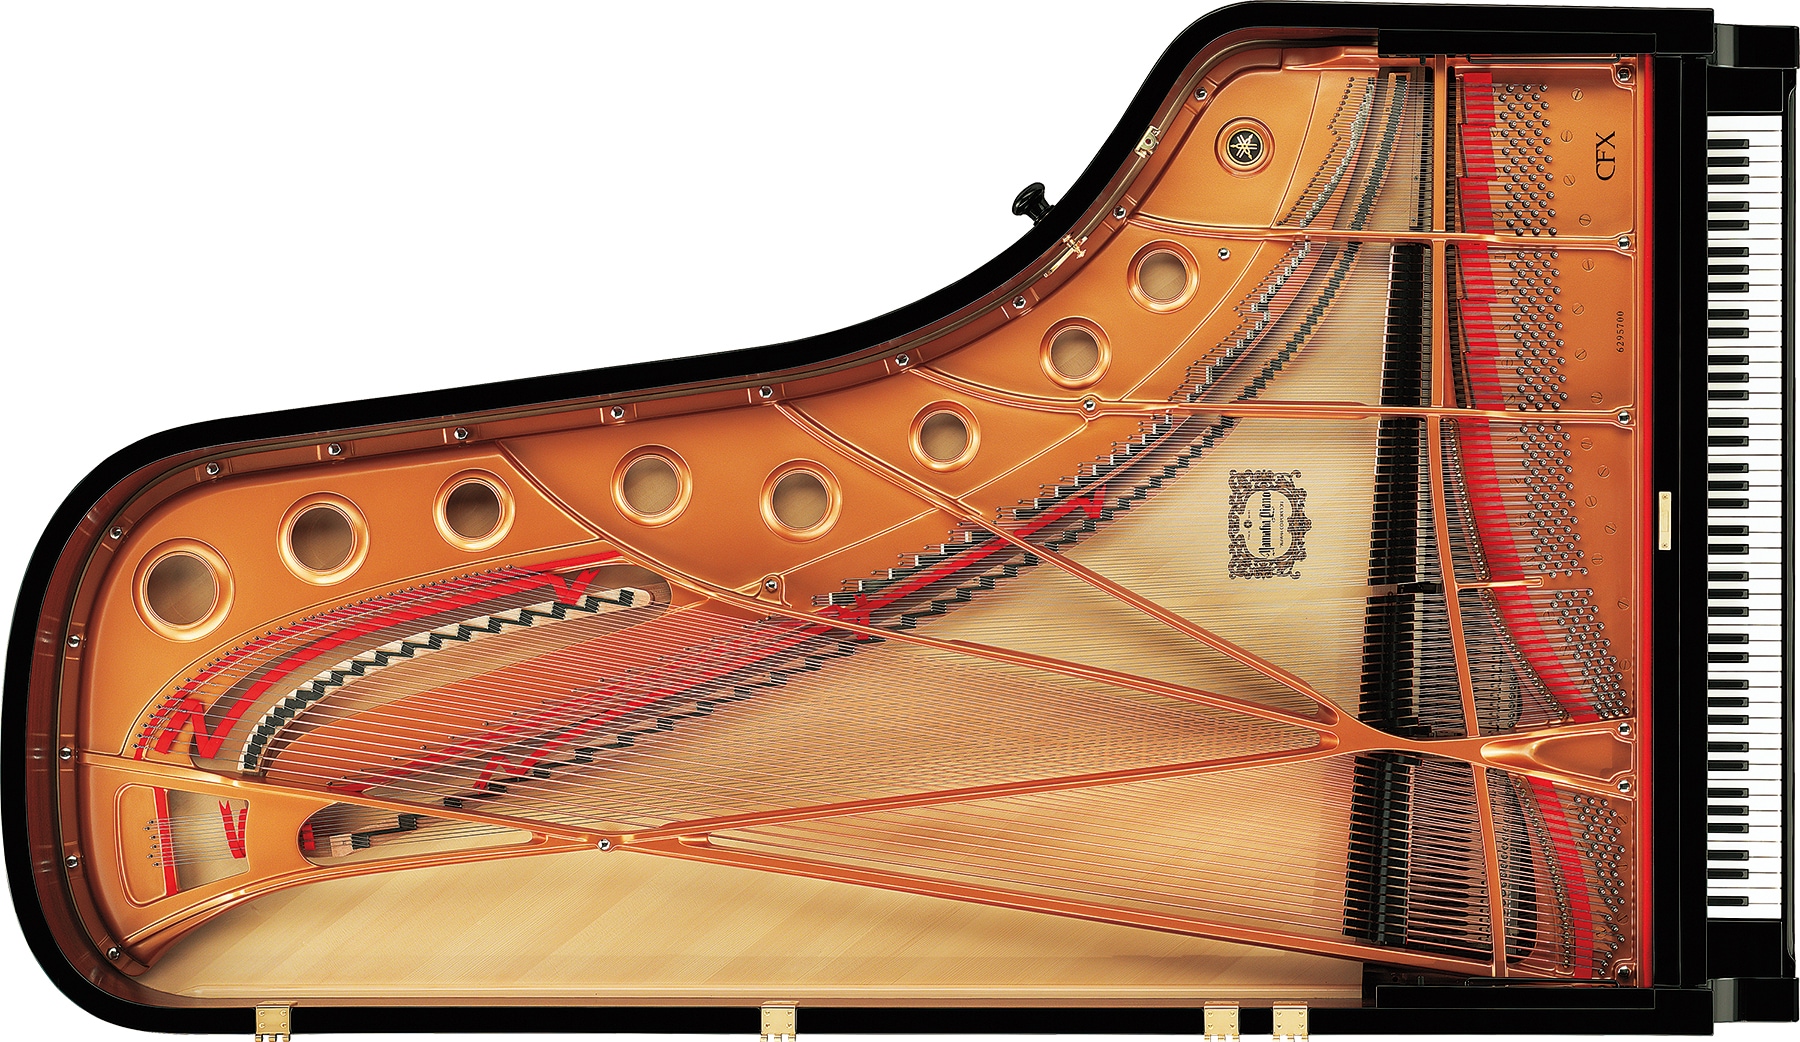 Internal parts of a grand piano